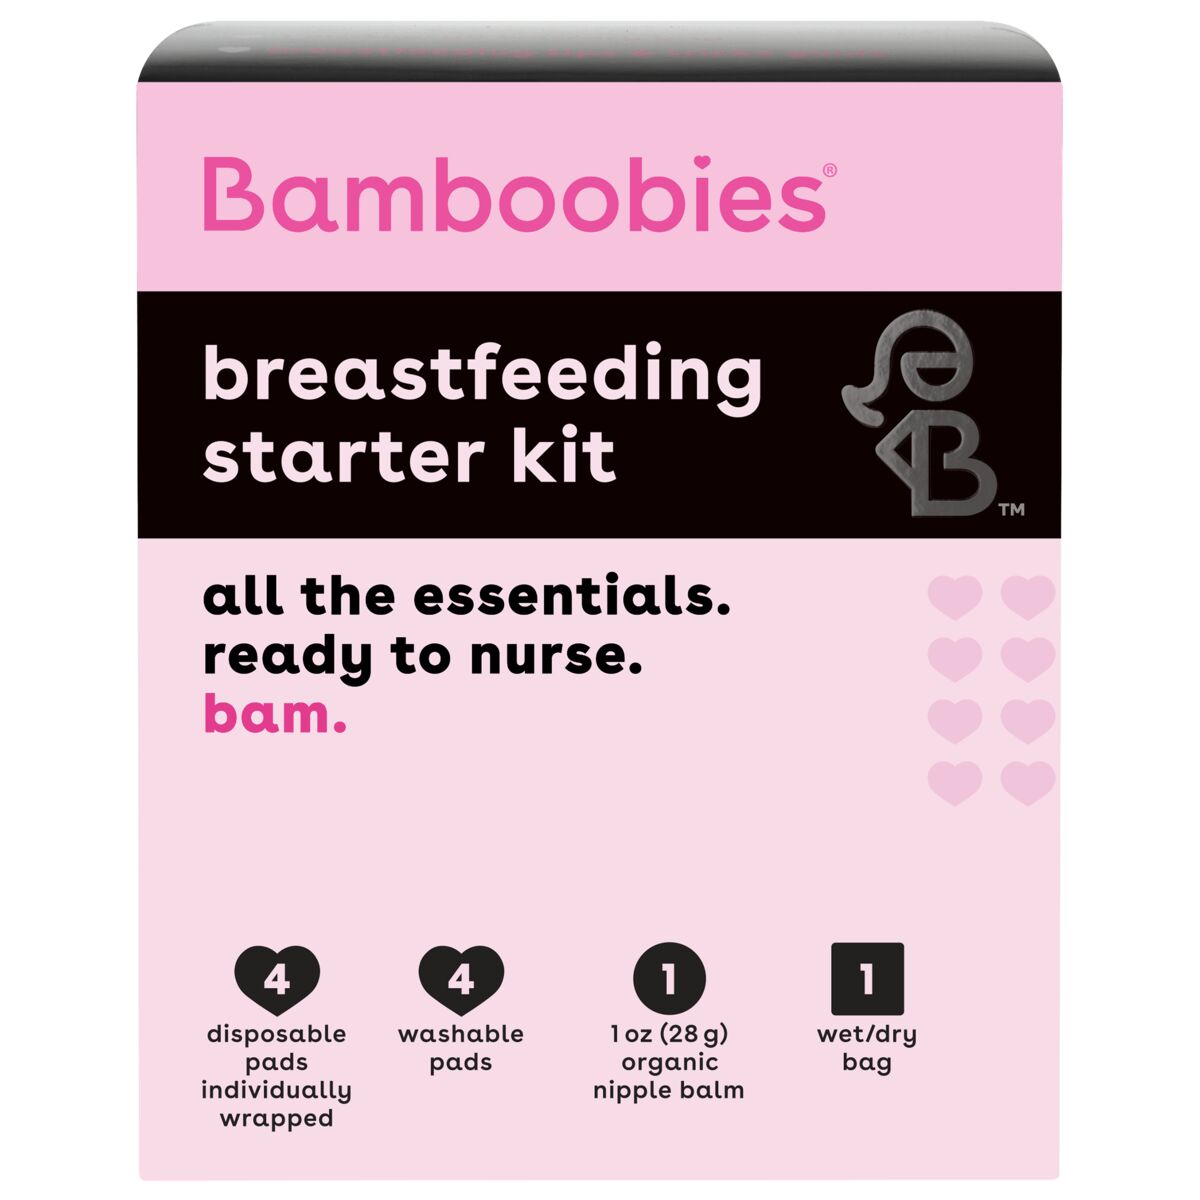 Bamboobies breastfeeding starter kit